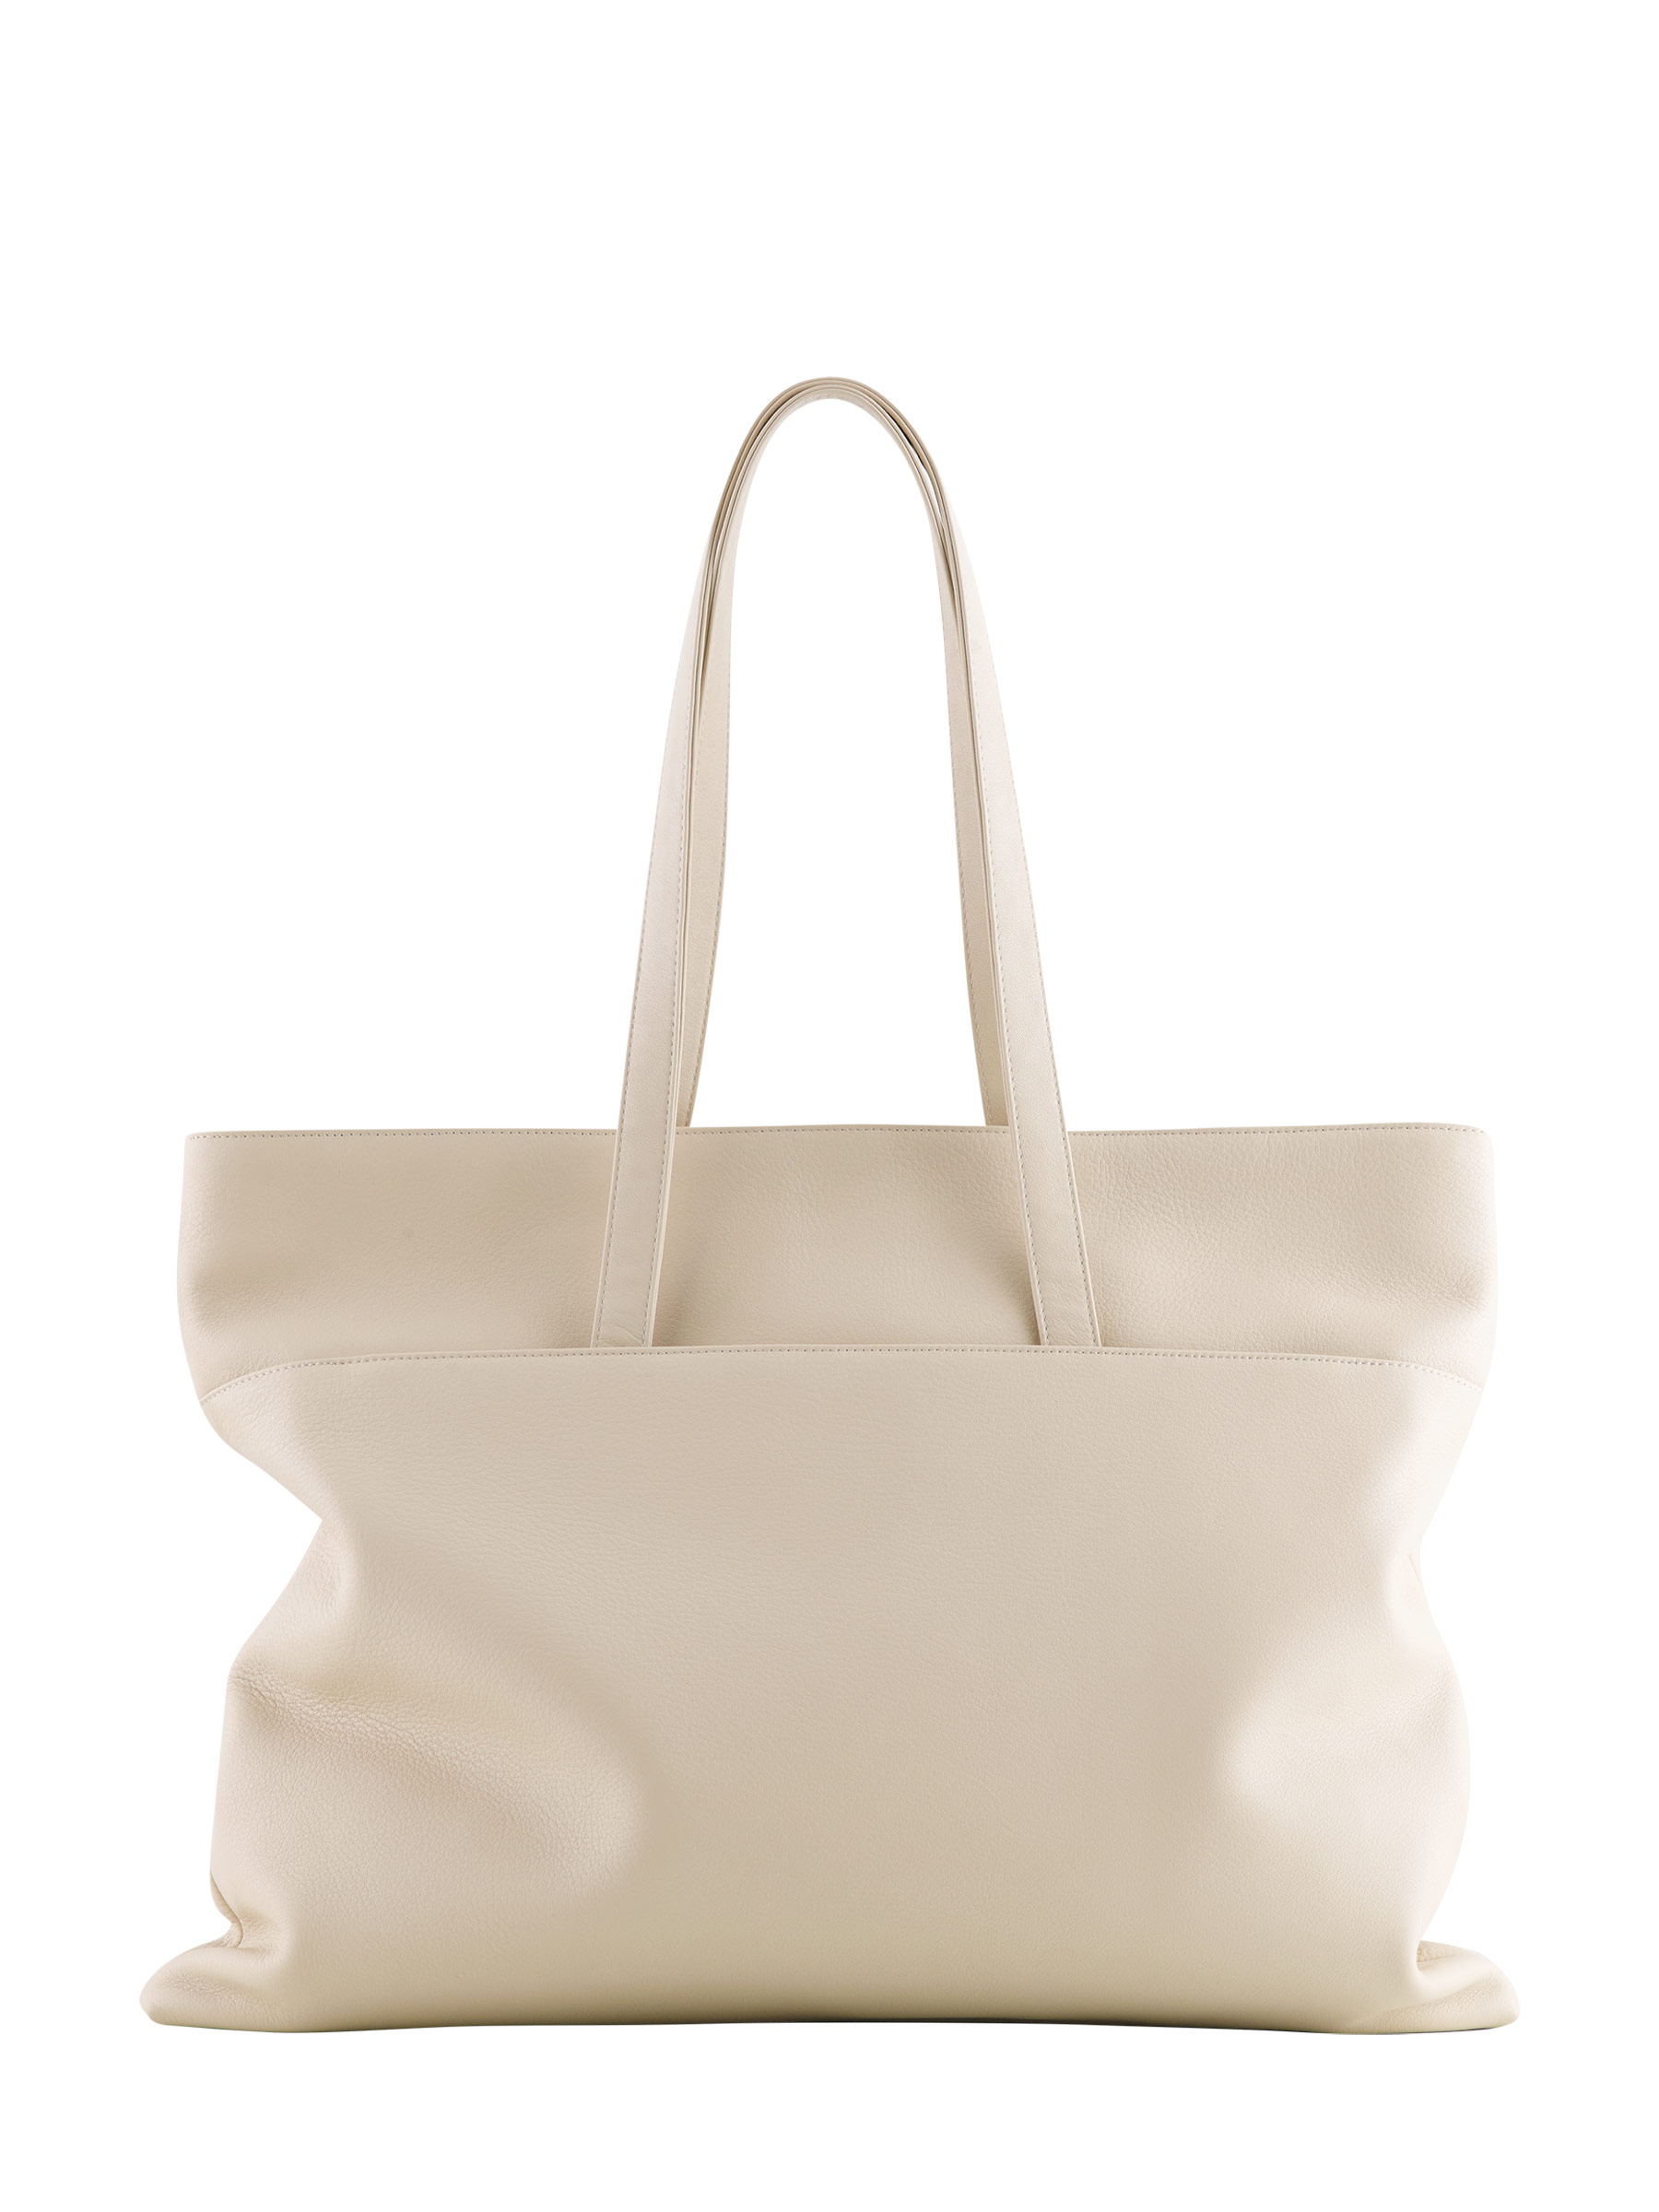 ATLAS shoulder bag in ivory calfskin leather | TSATSAS